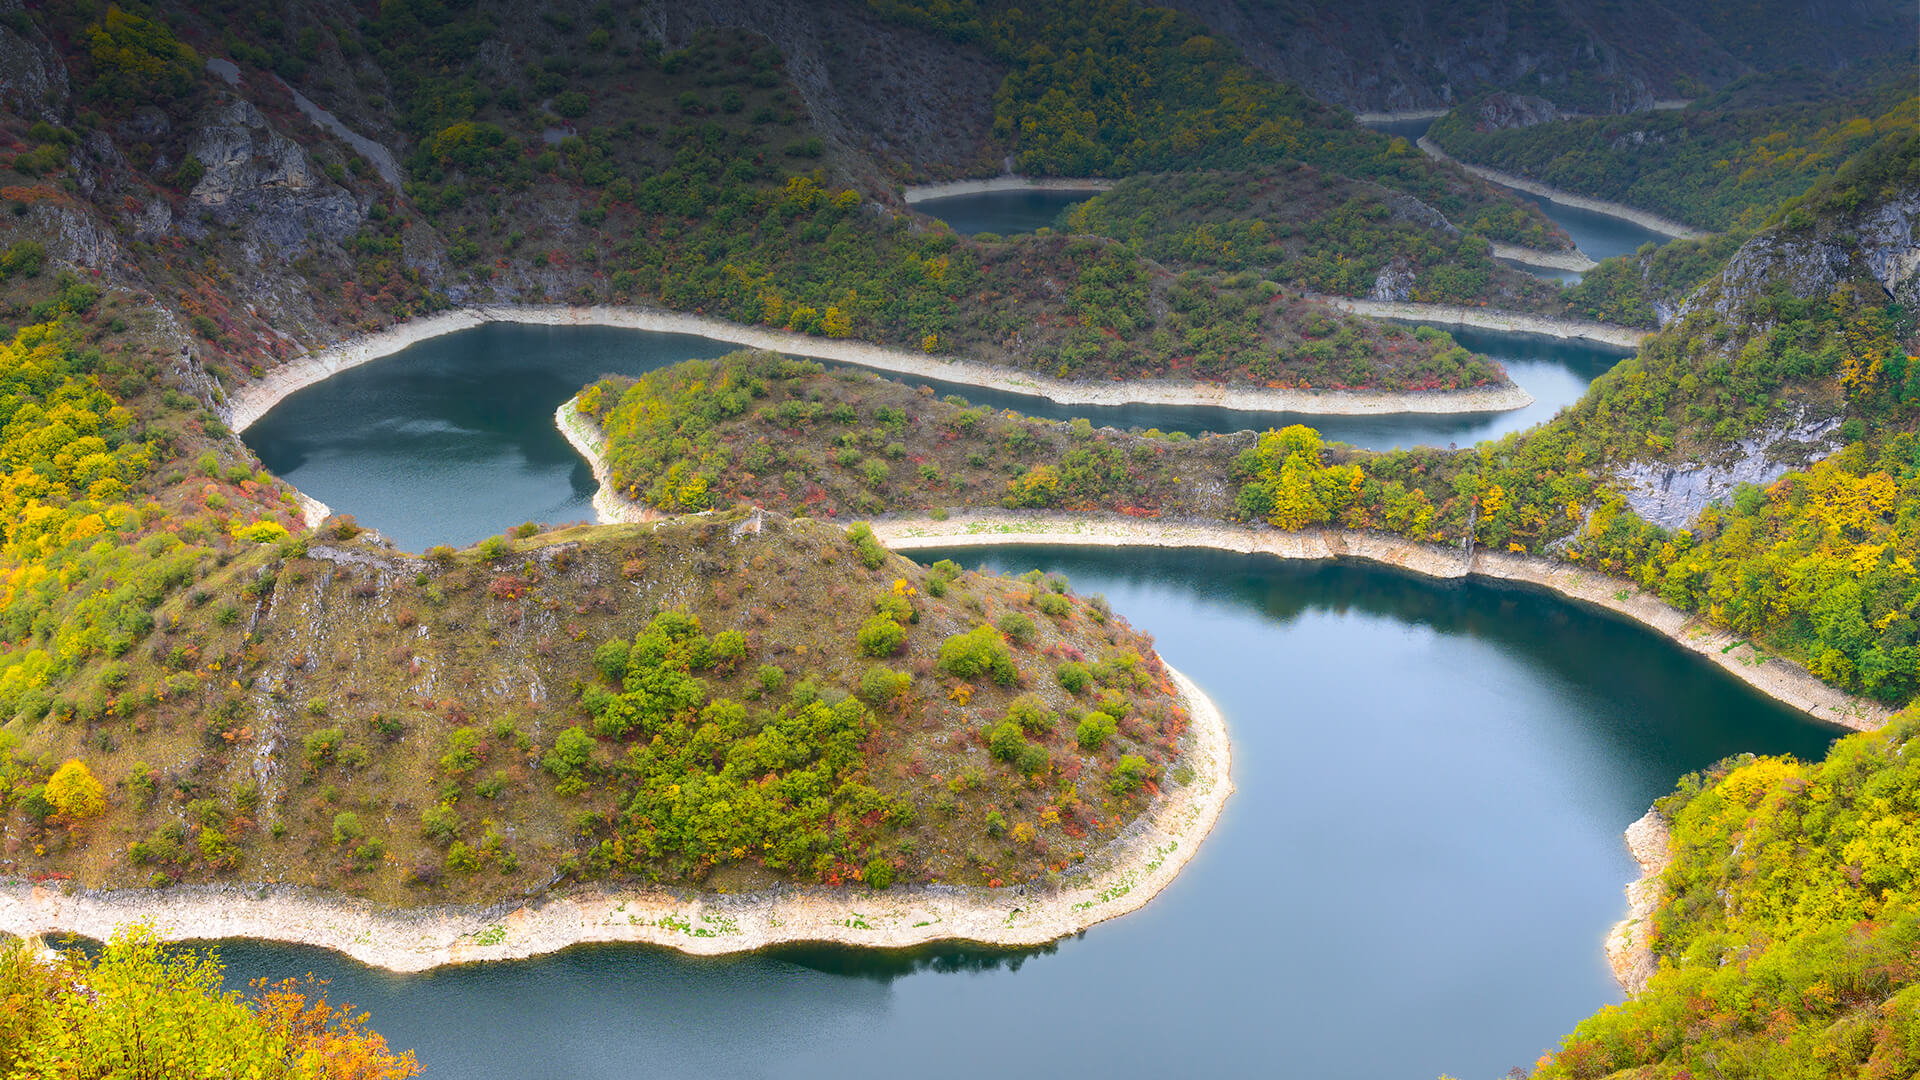 Vac River, Serbia